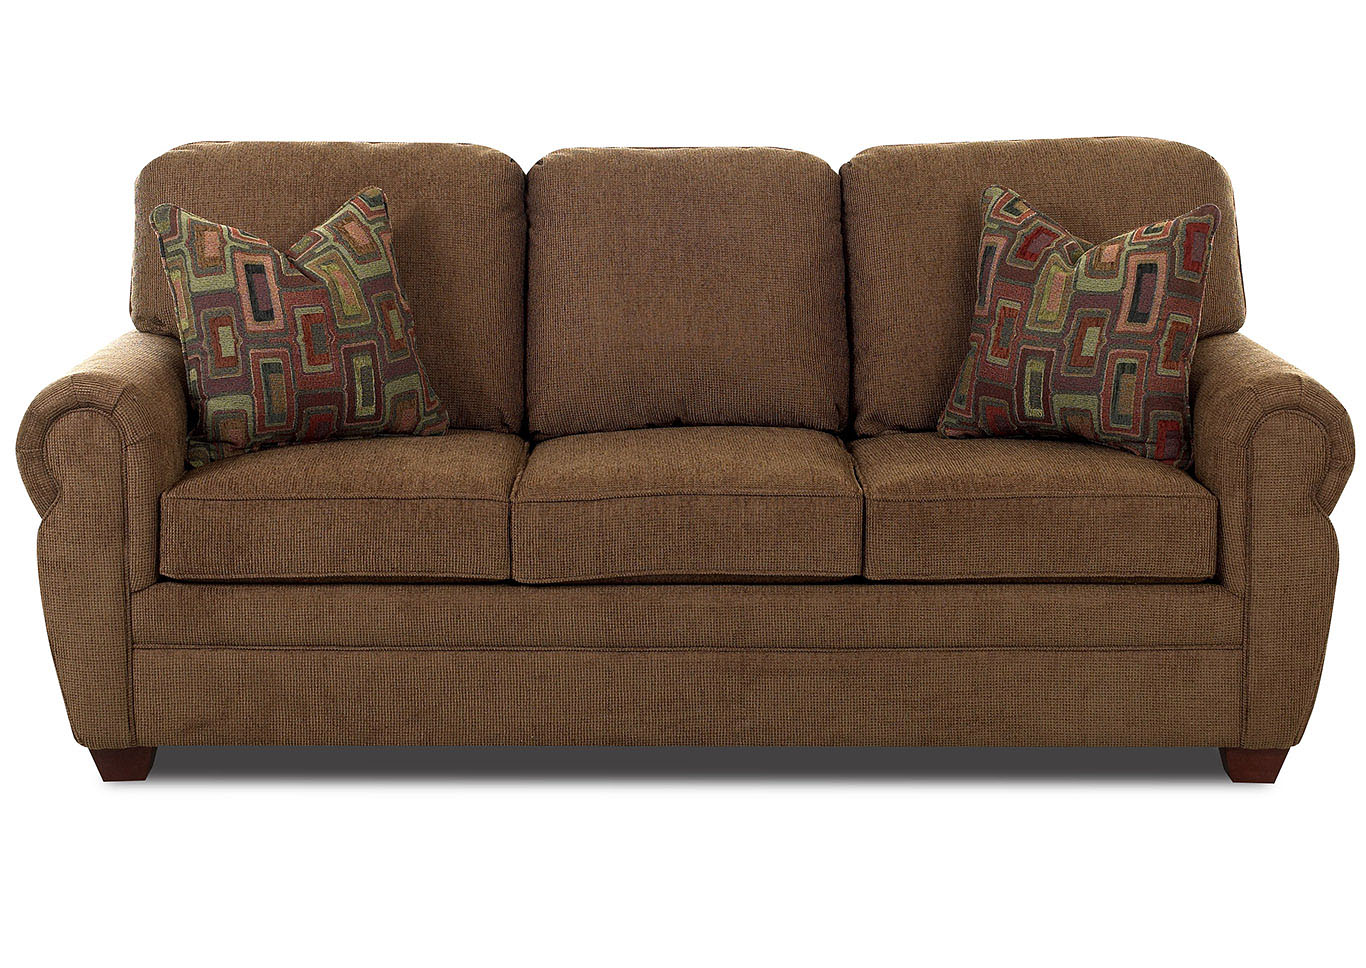 Westbrook Chestnut Stationary Fabric Sofa,Klaussner Home Furnishings